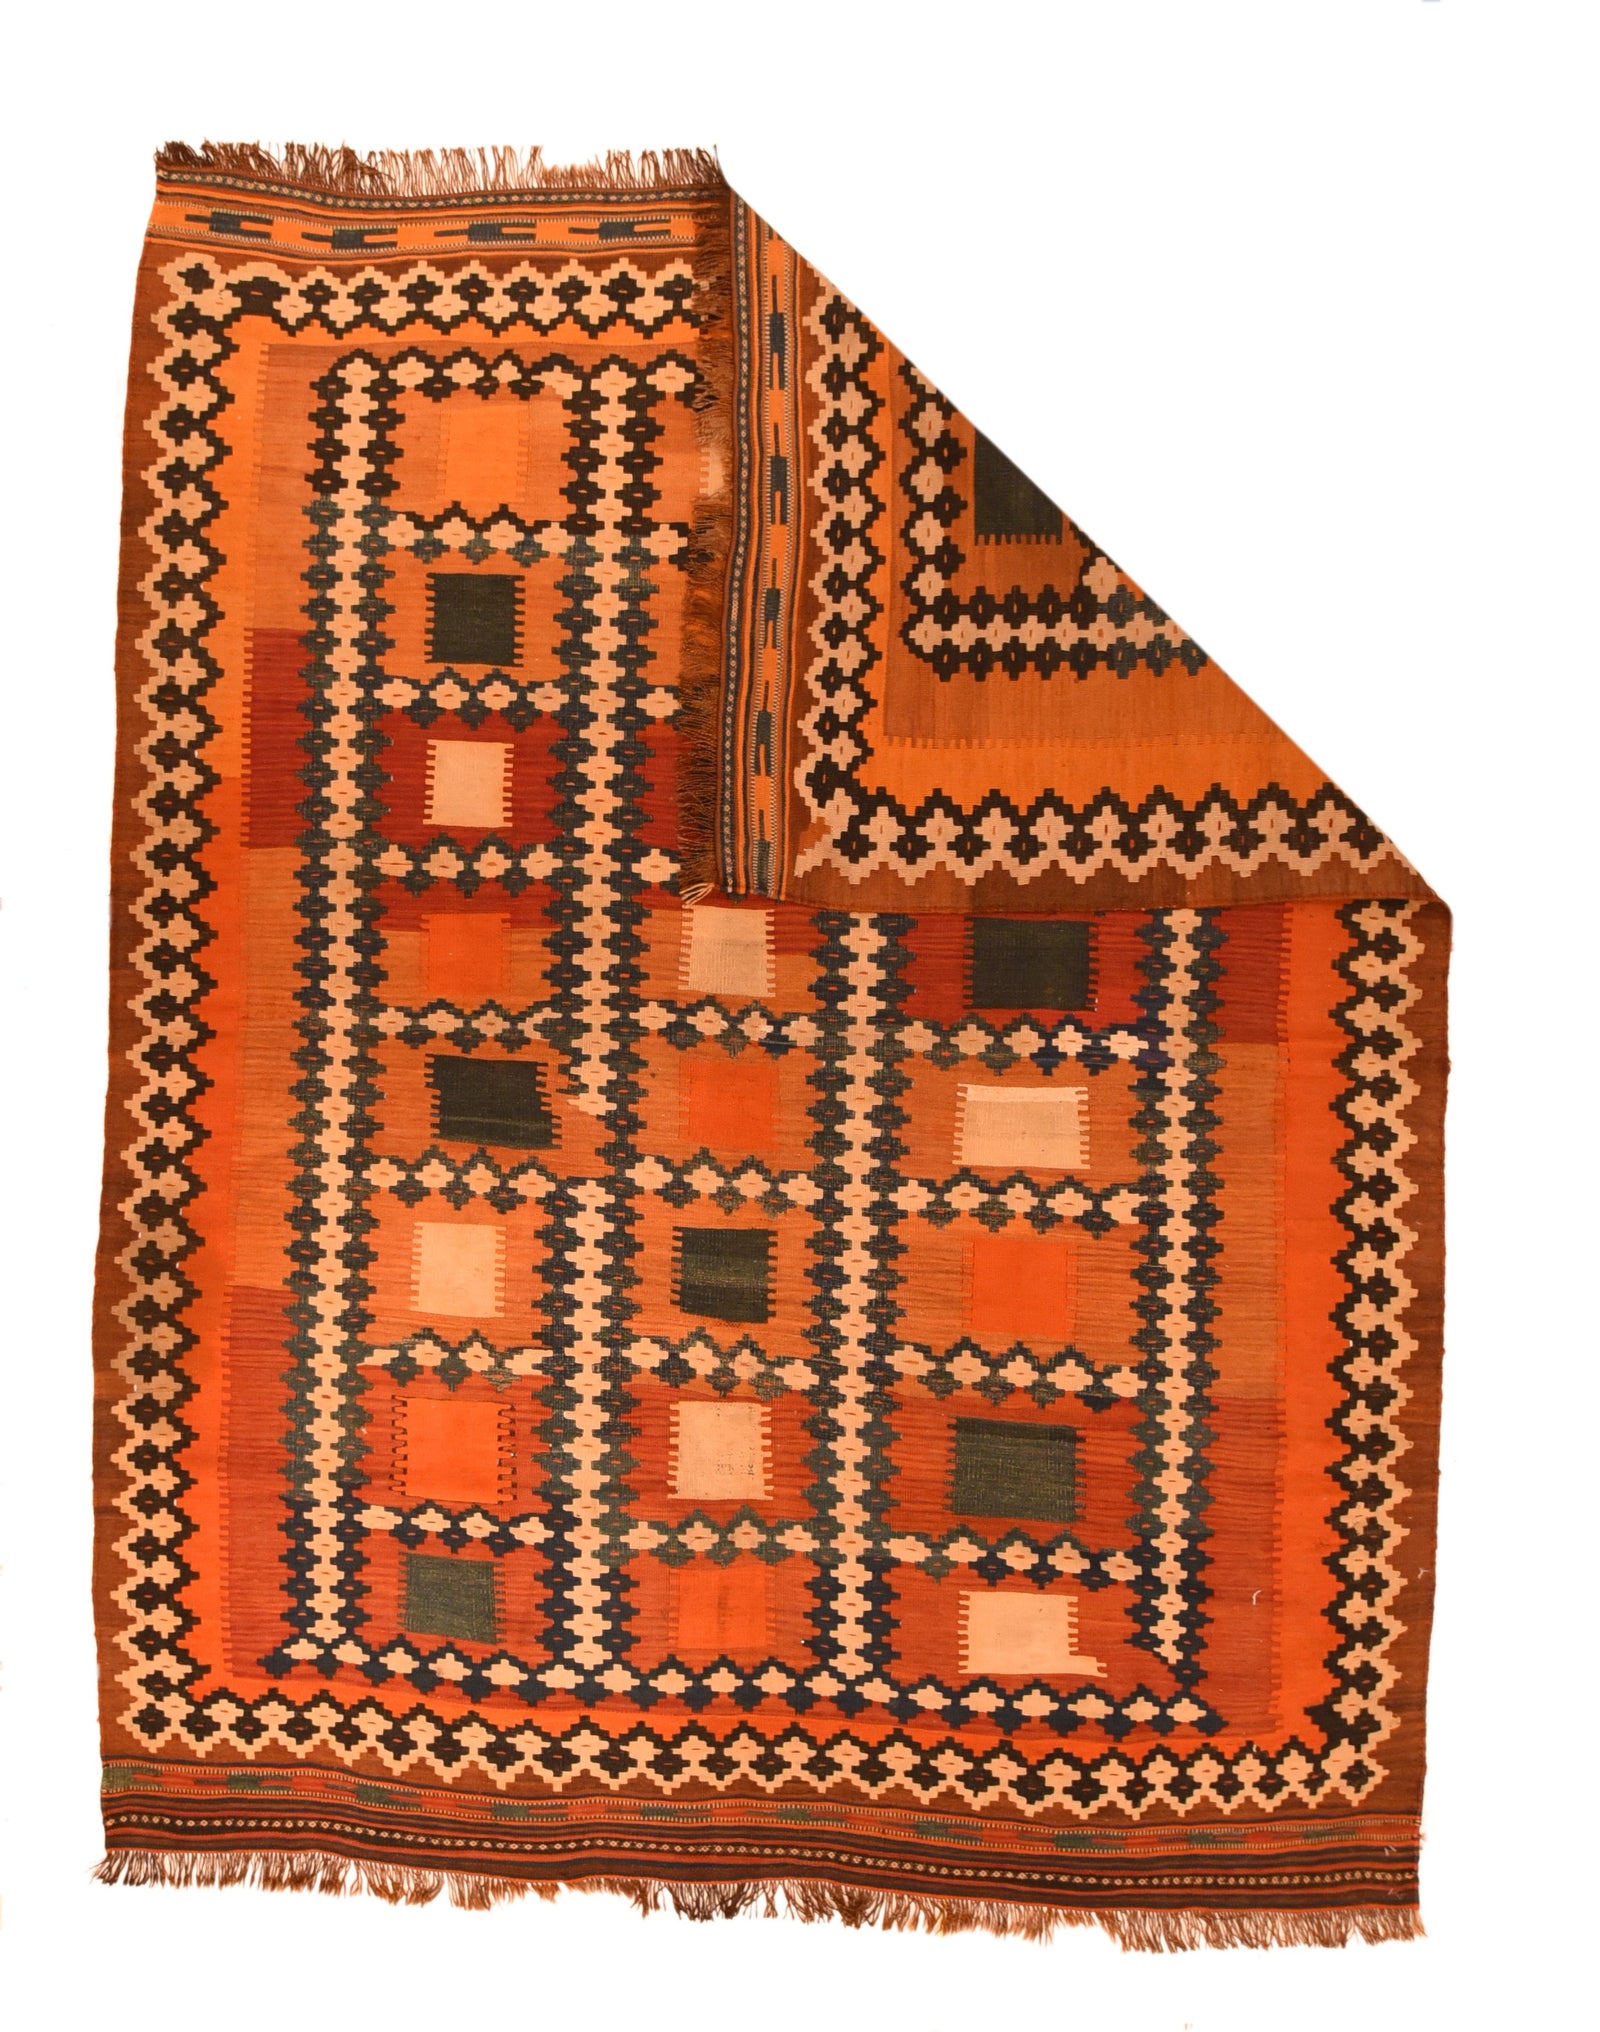 Fine Antique Persian Tribal Flat Weave Kilim